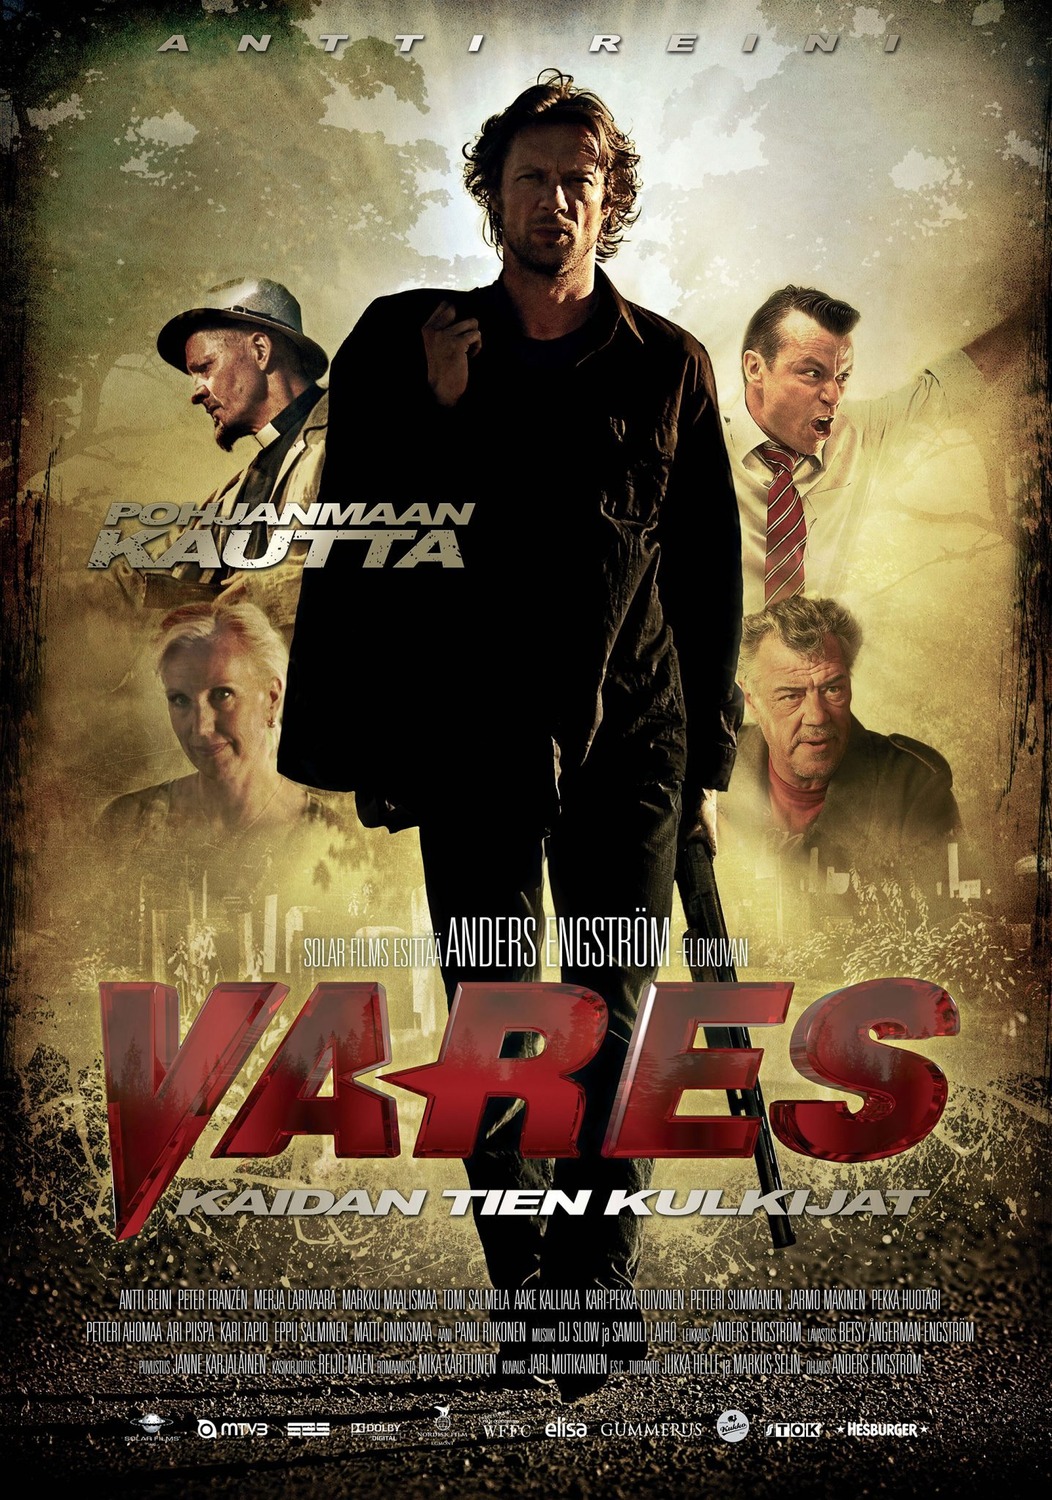 Extra Large Movie Poster Image for Vares - Kaidan tien kulkijat 